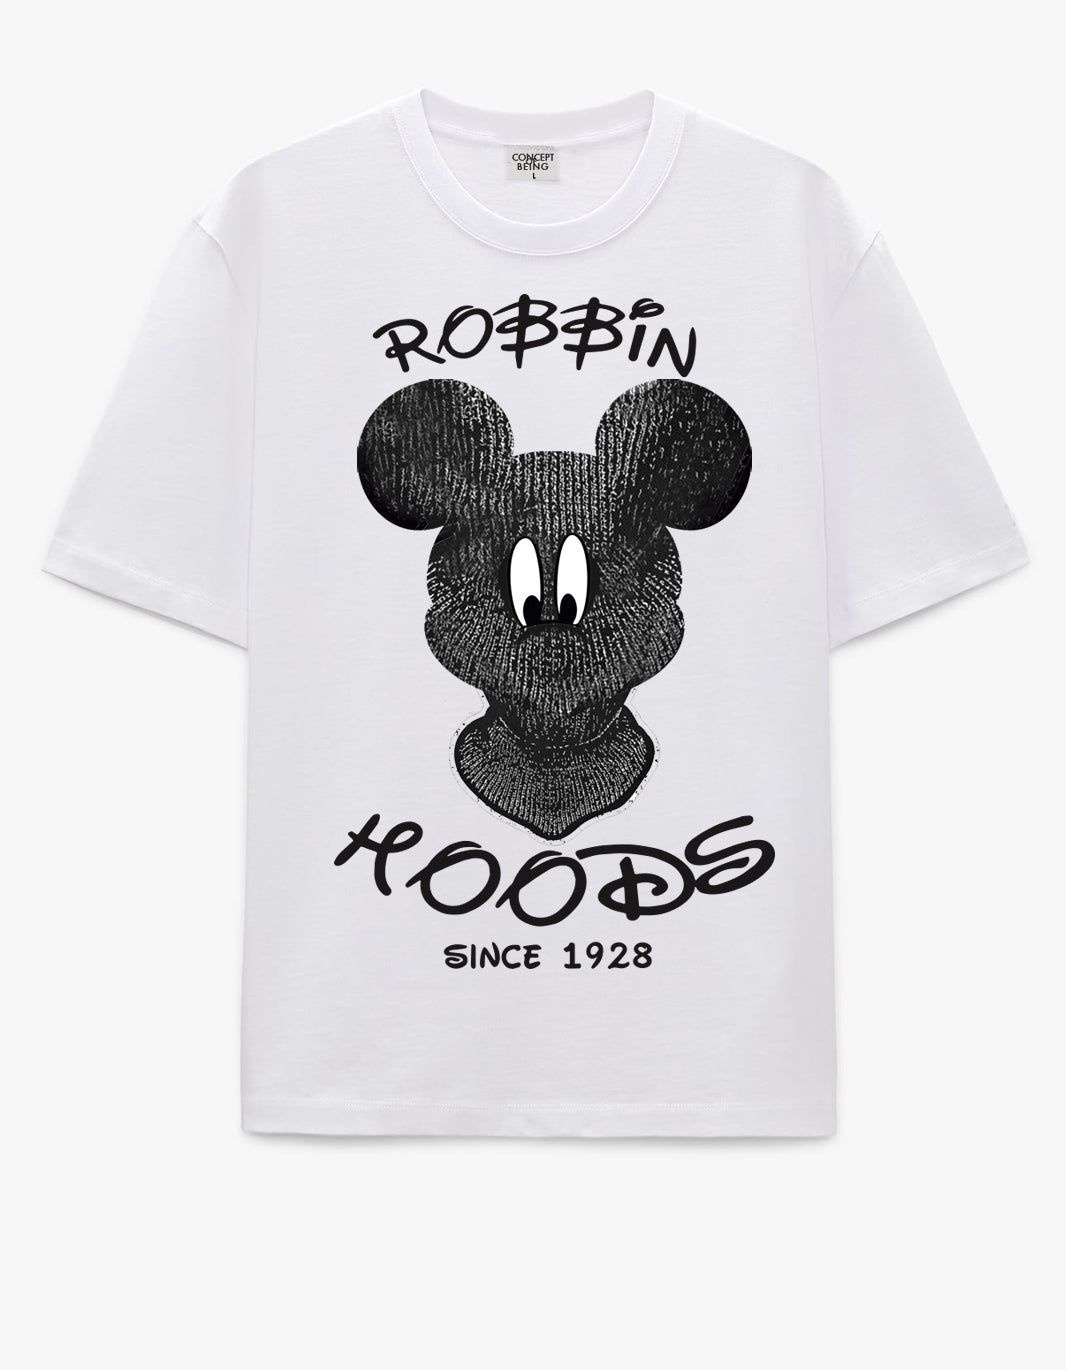 Robbin Hood Limited Edition T-Shirt